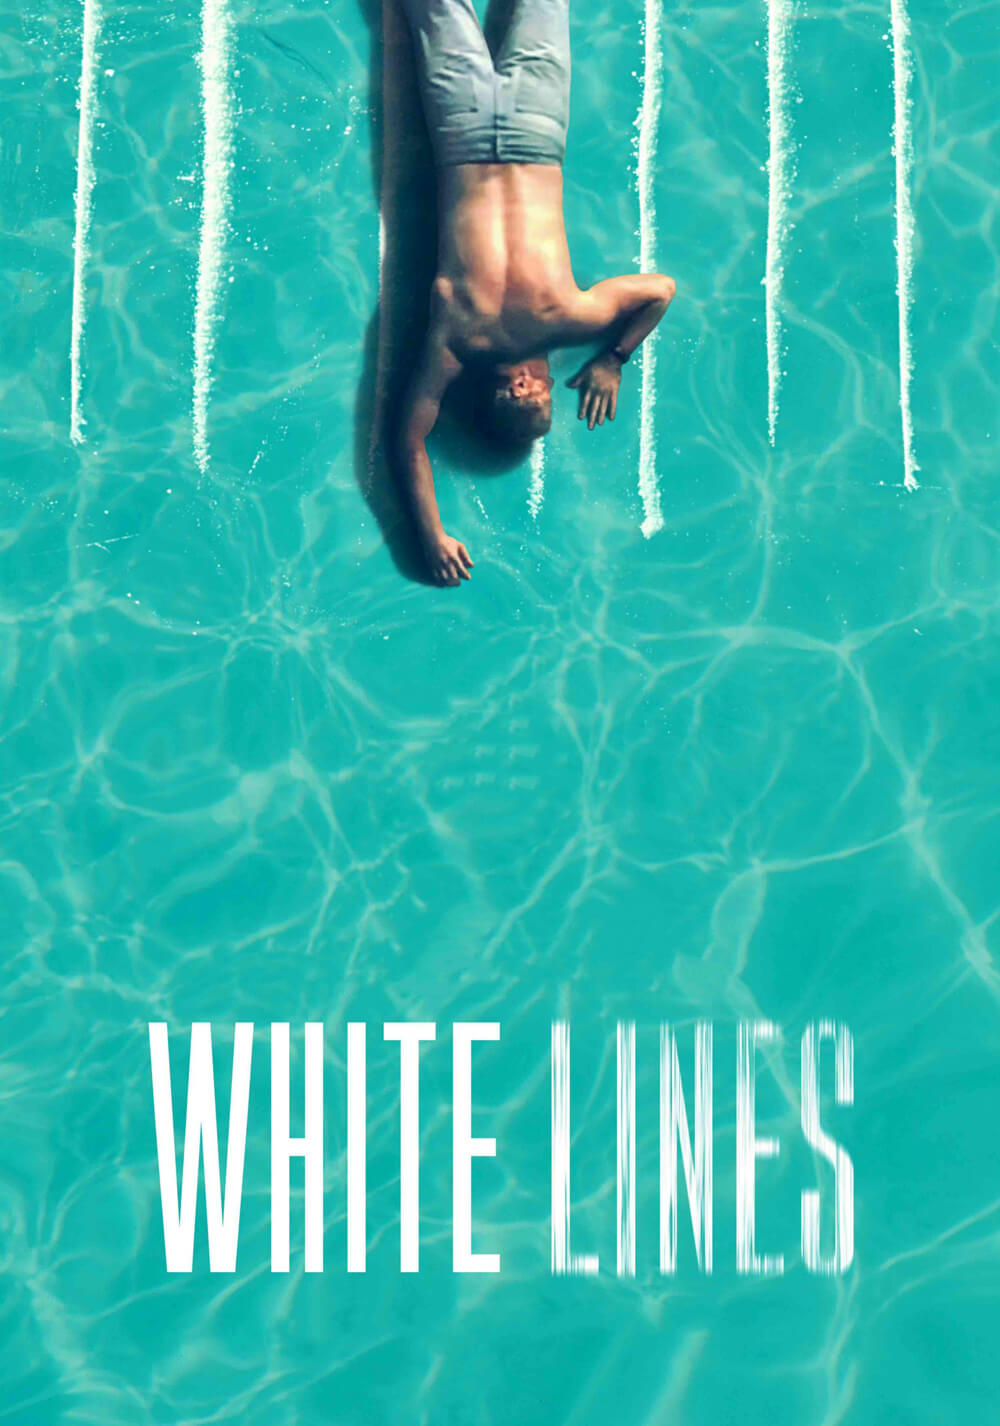 خطوط سفید (White Lines)